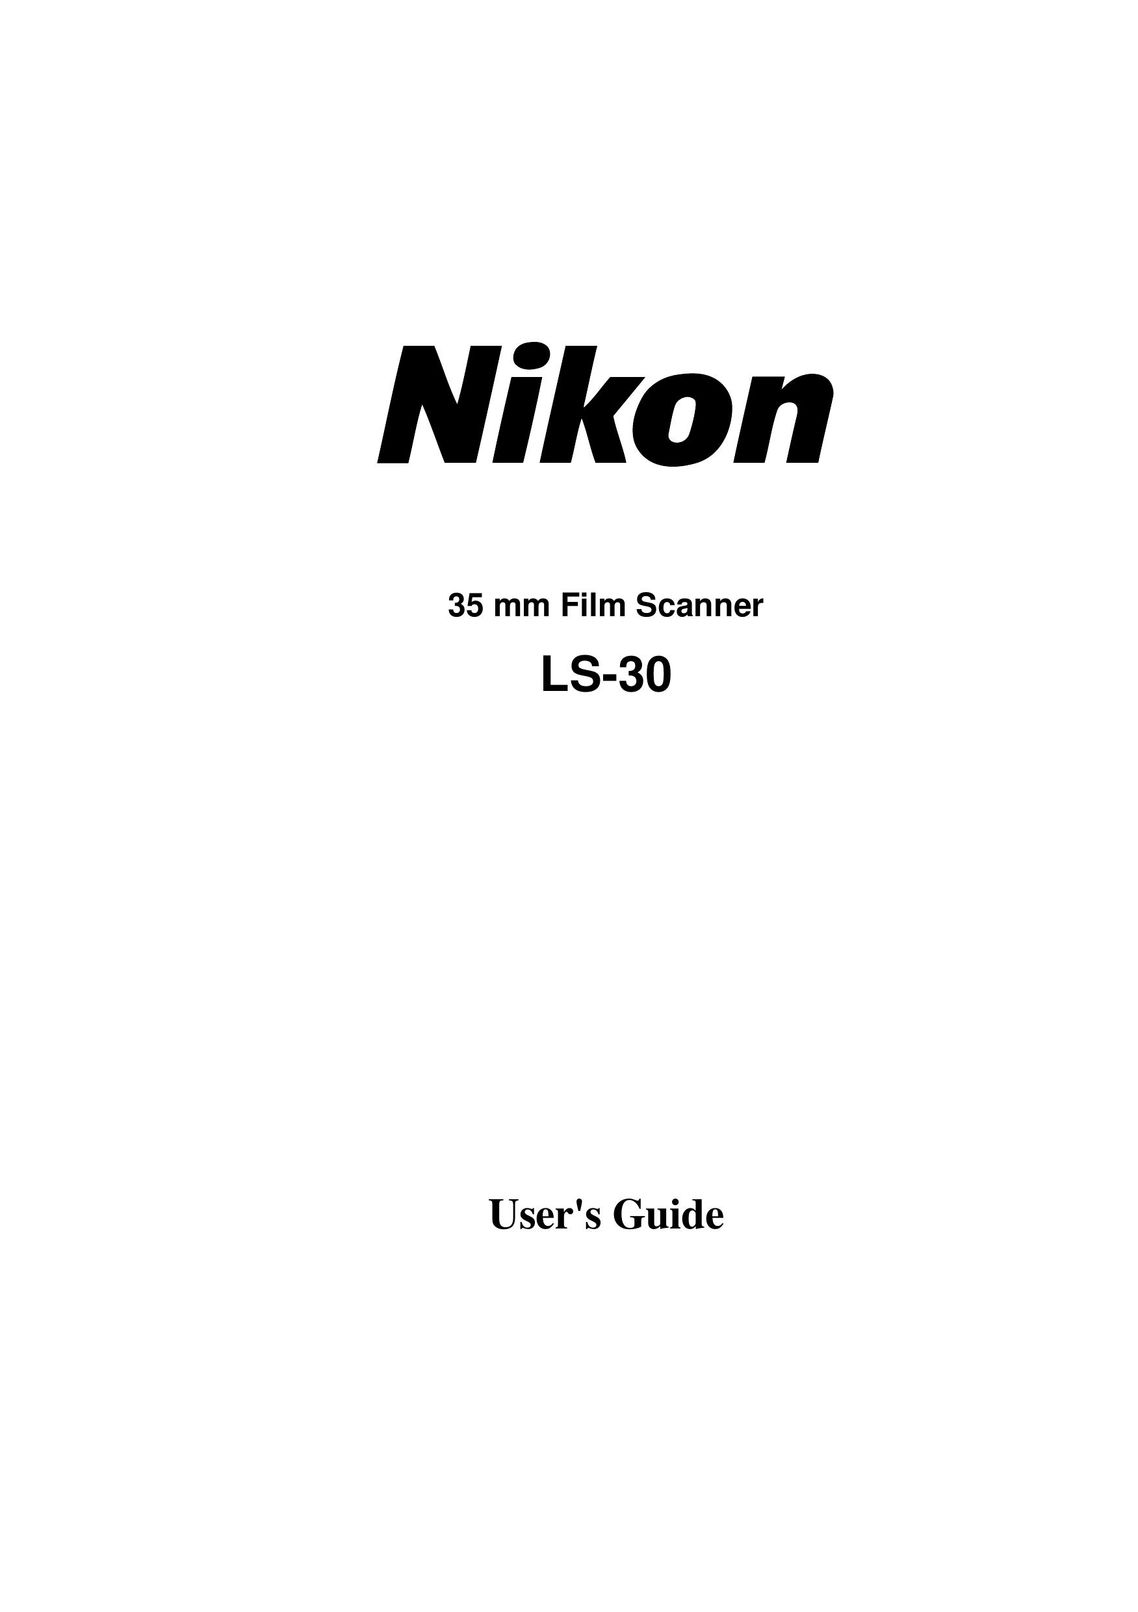 Nikon LS-30 Scanner User Manual